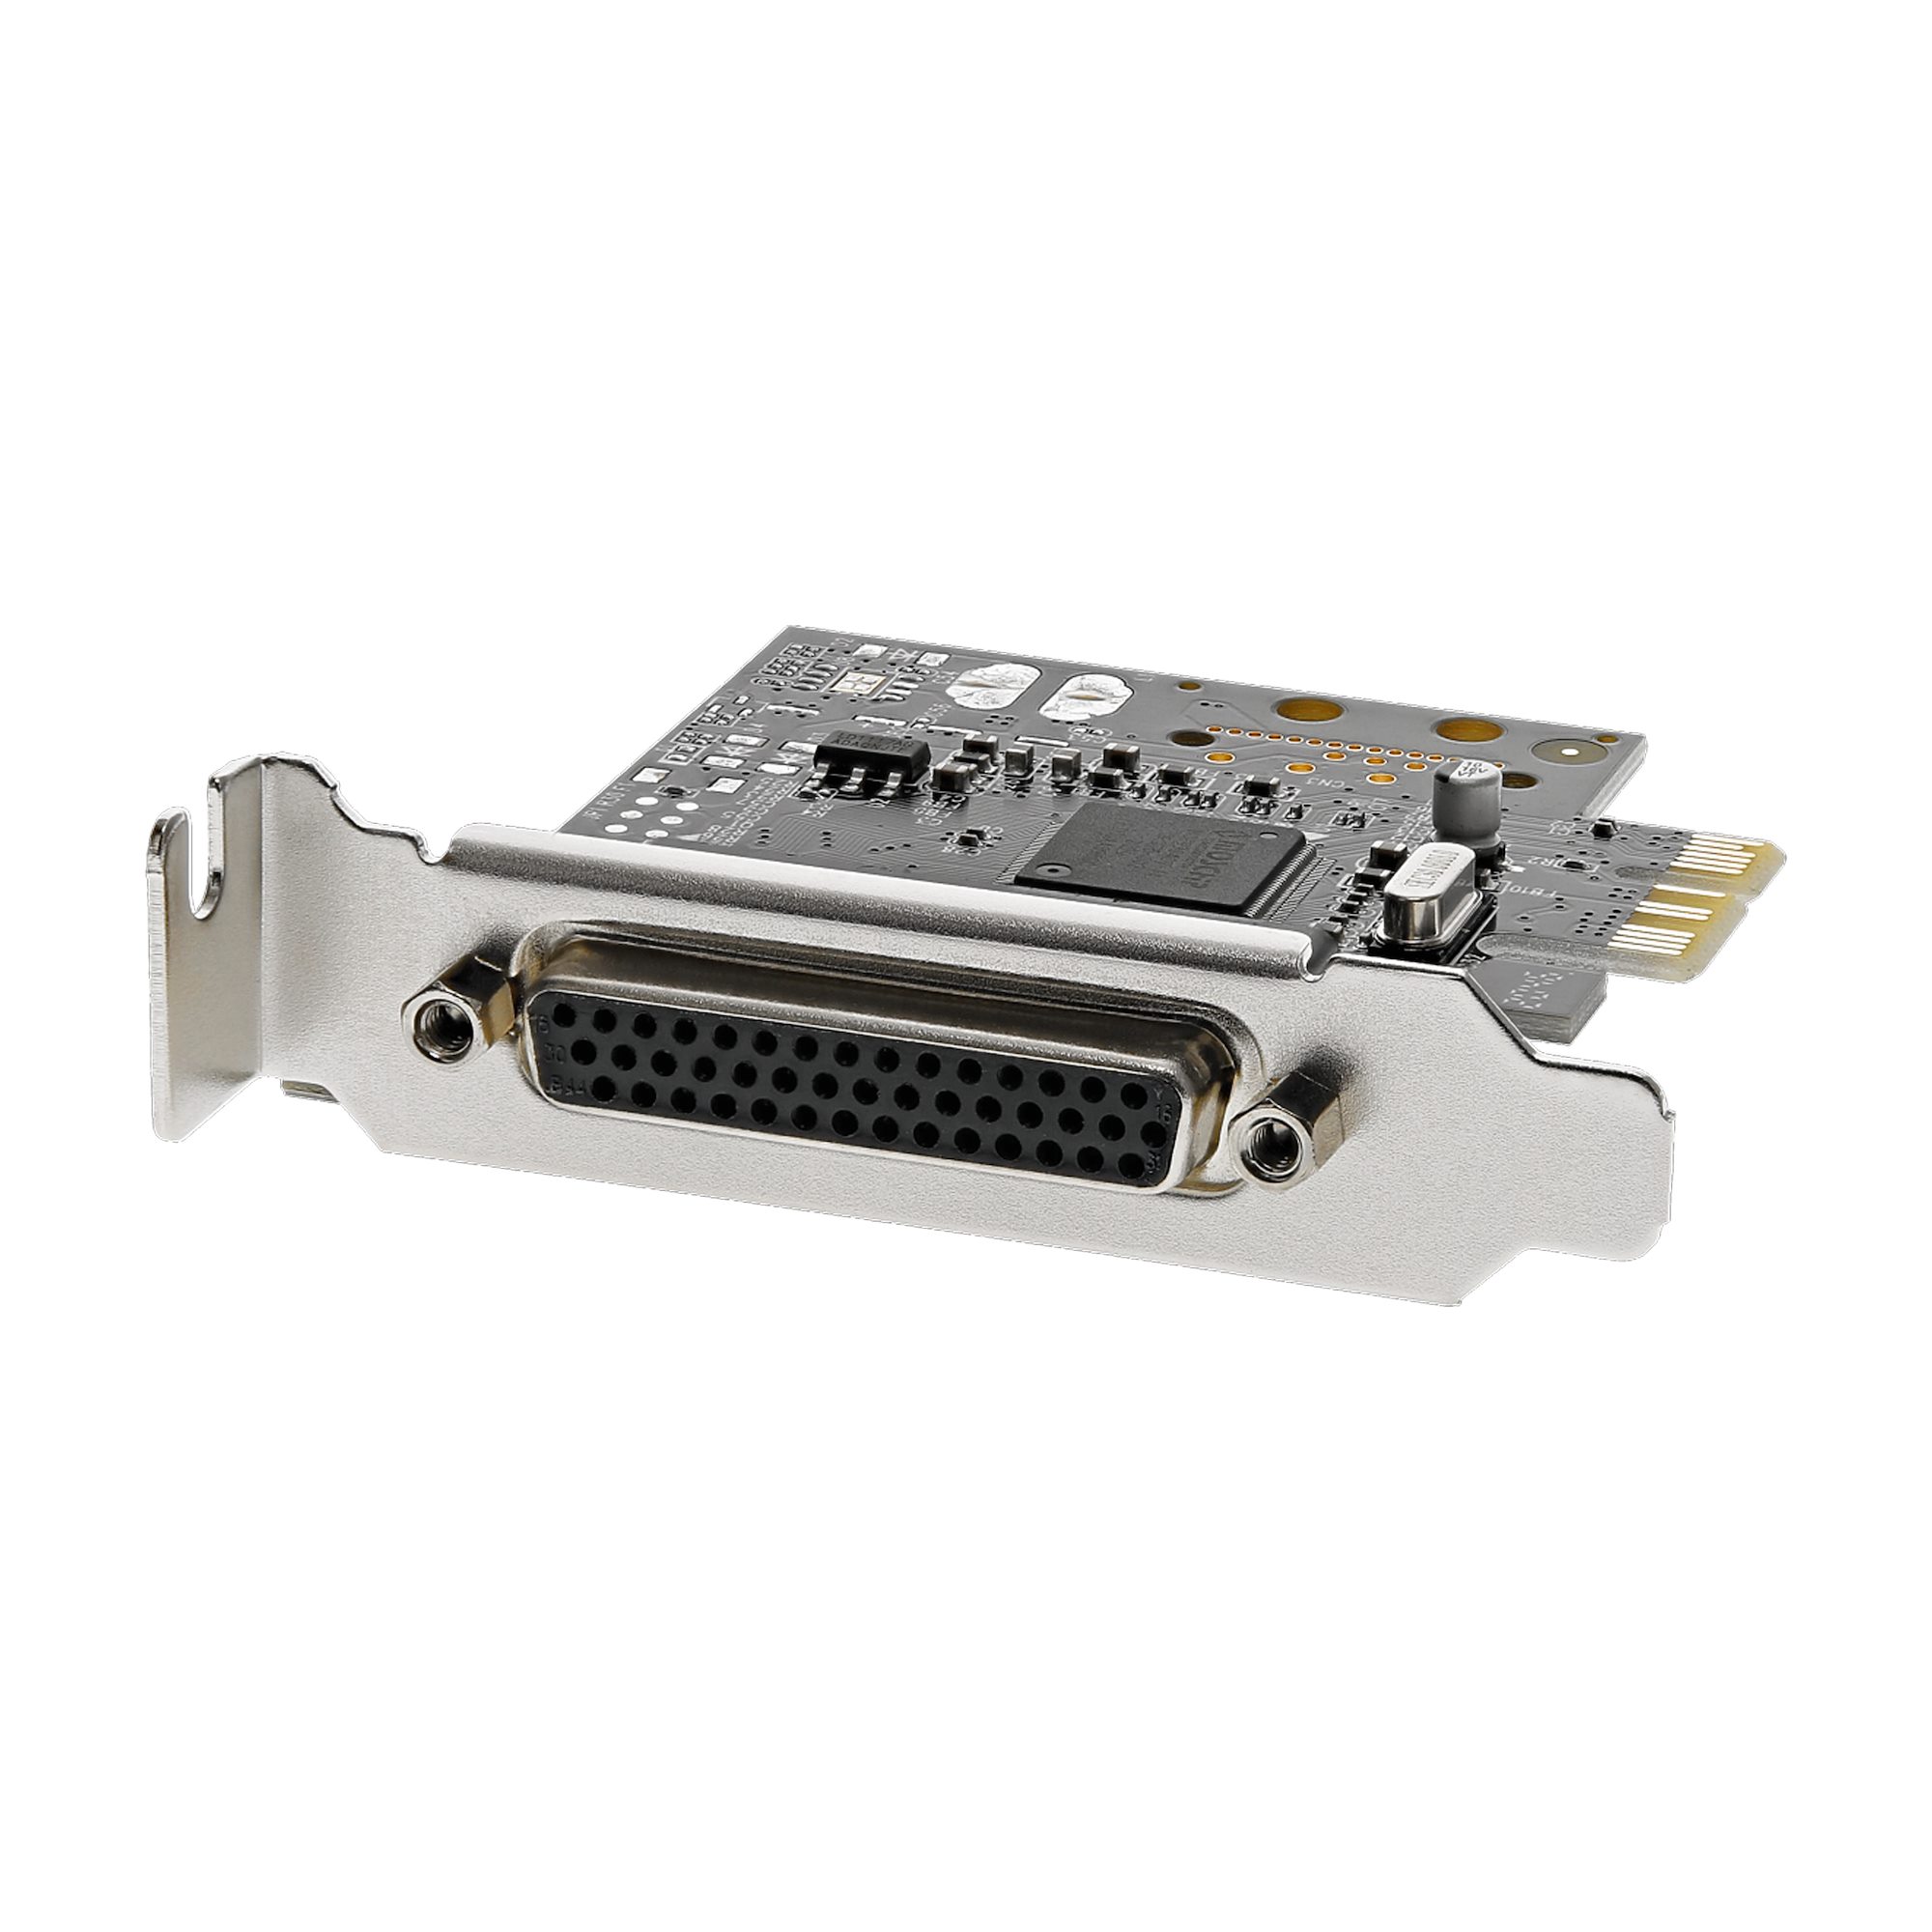 【PEX4S553B】4 PORT PCI EXPRESS SERIAL CARD